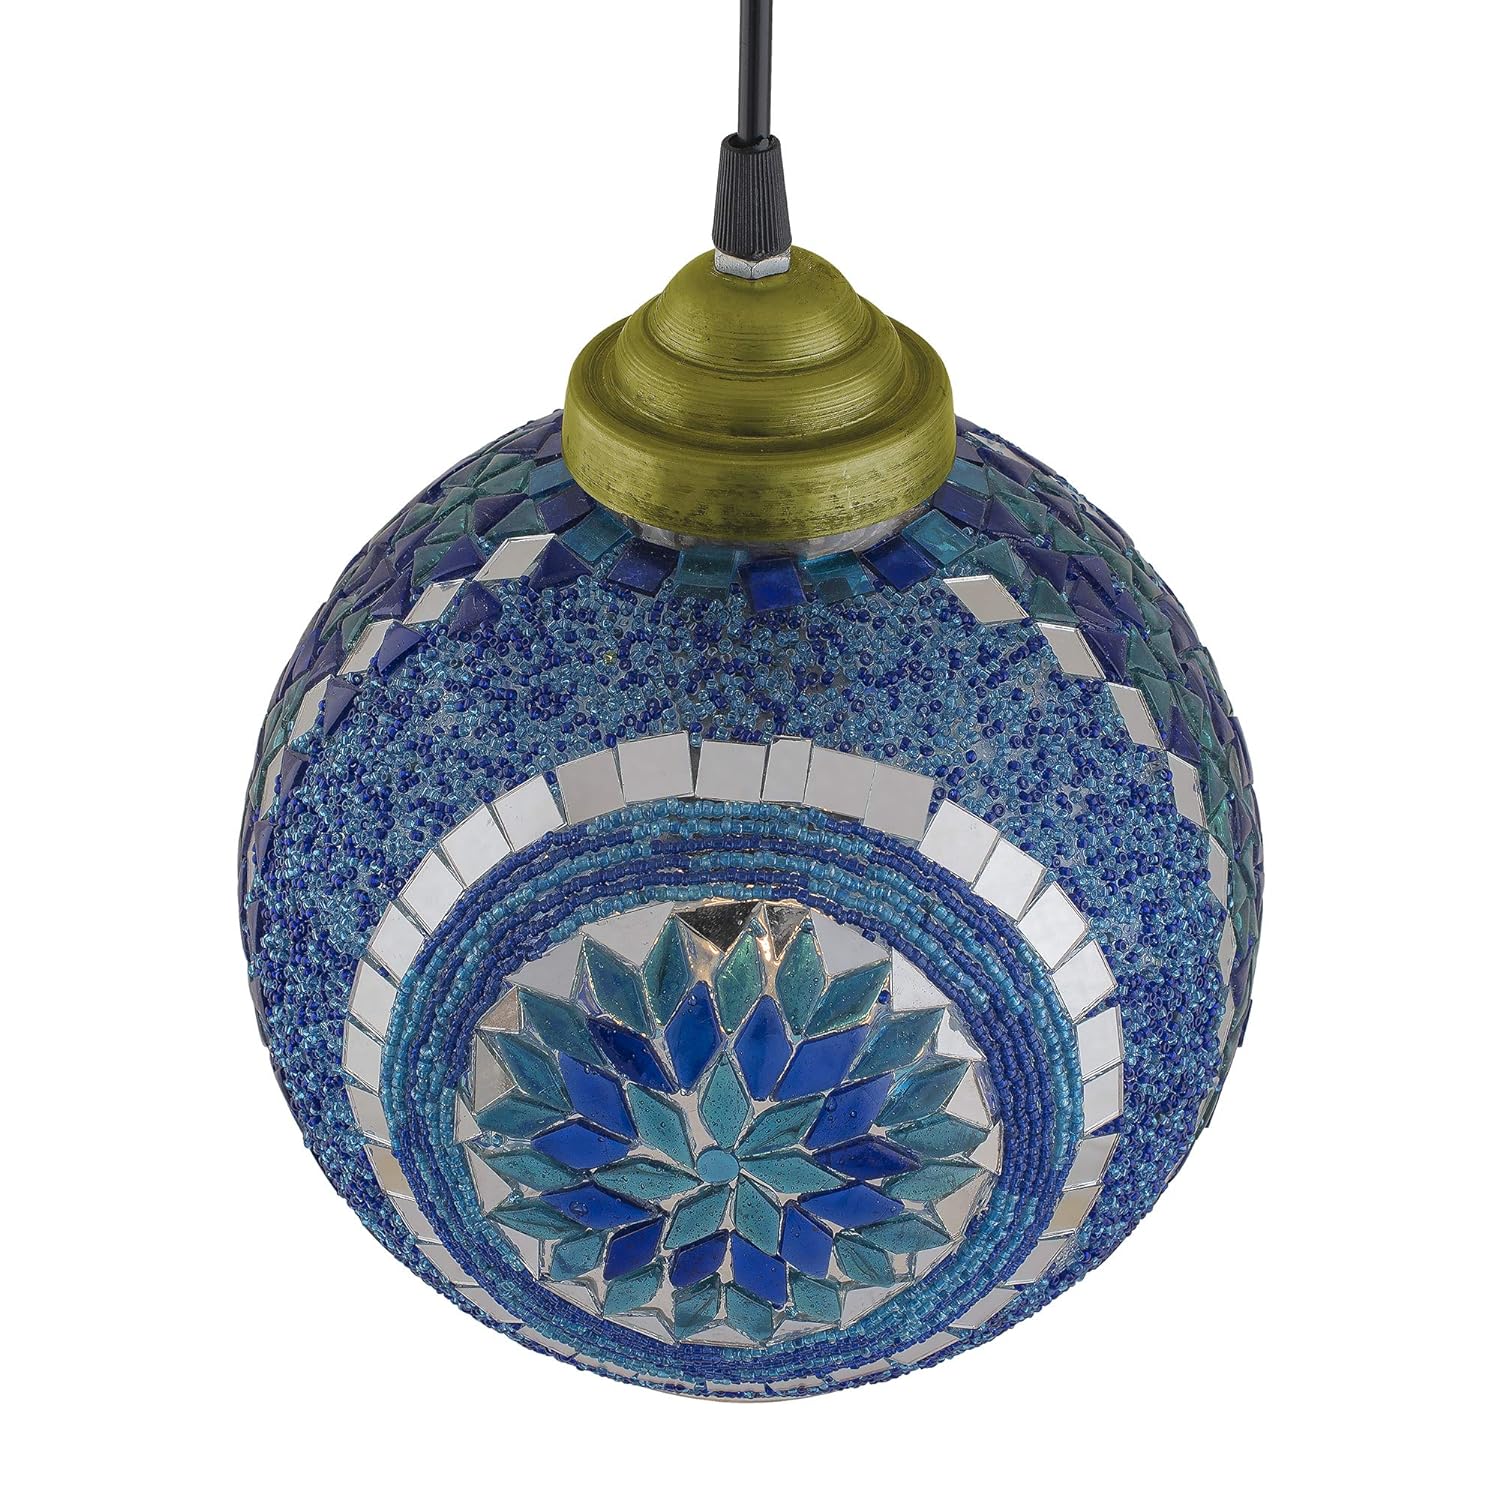 Turkish Moroccan Mosaic Blue Ceiling Hanging Light